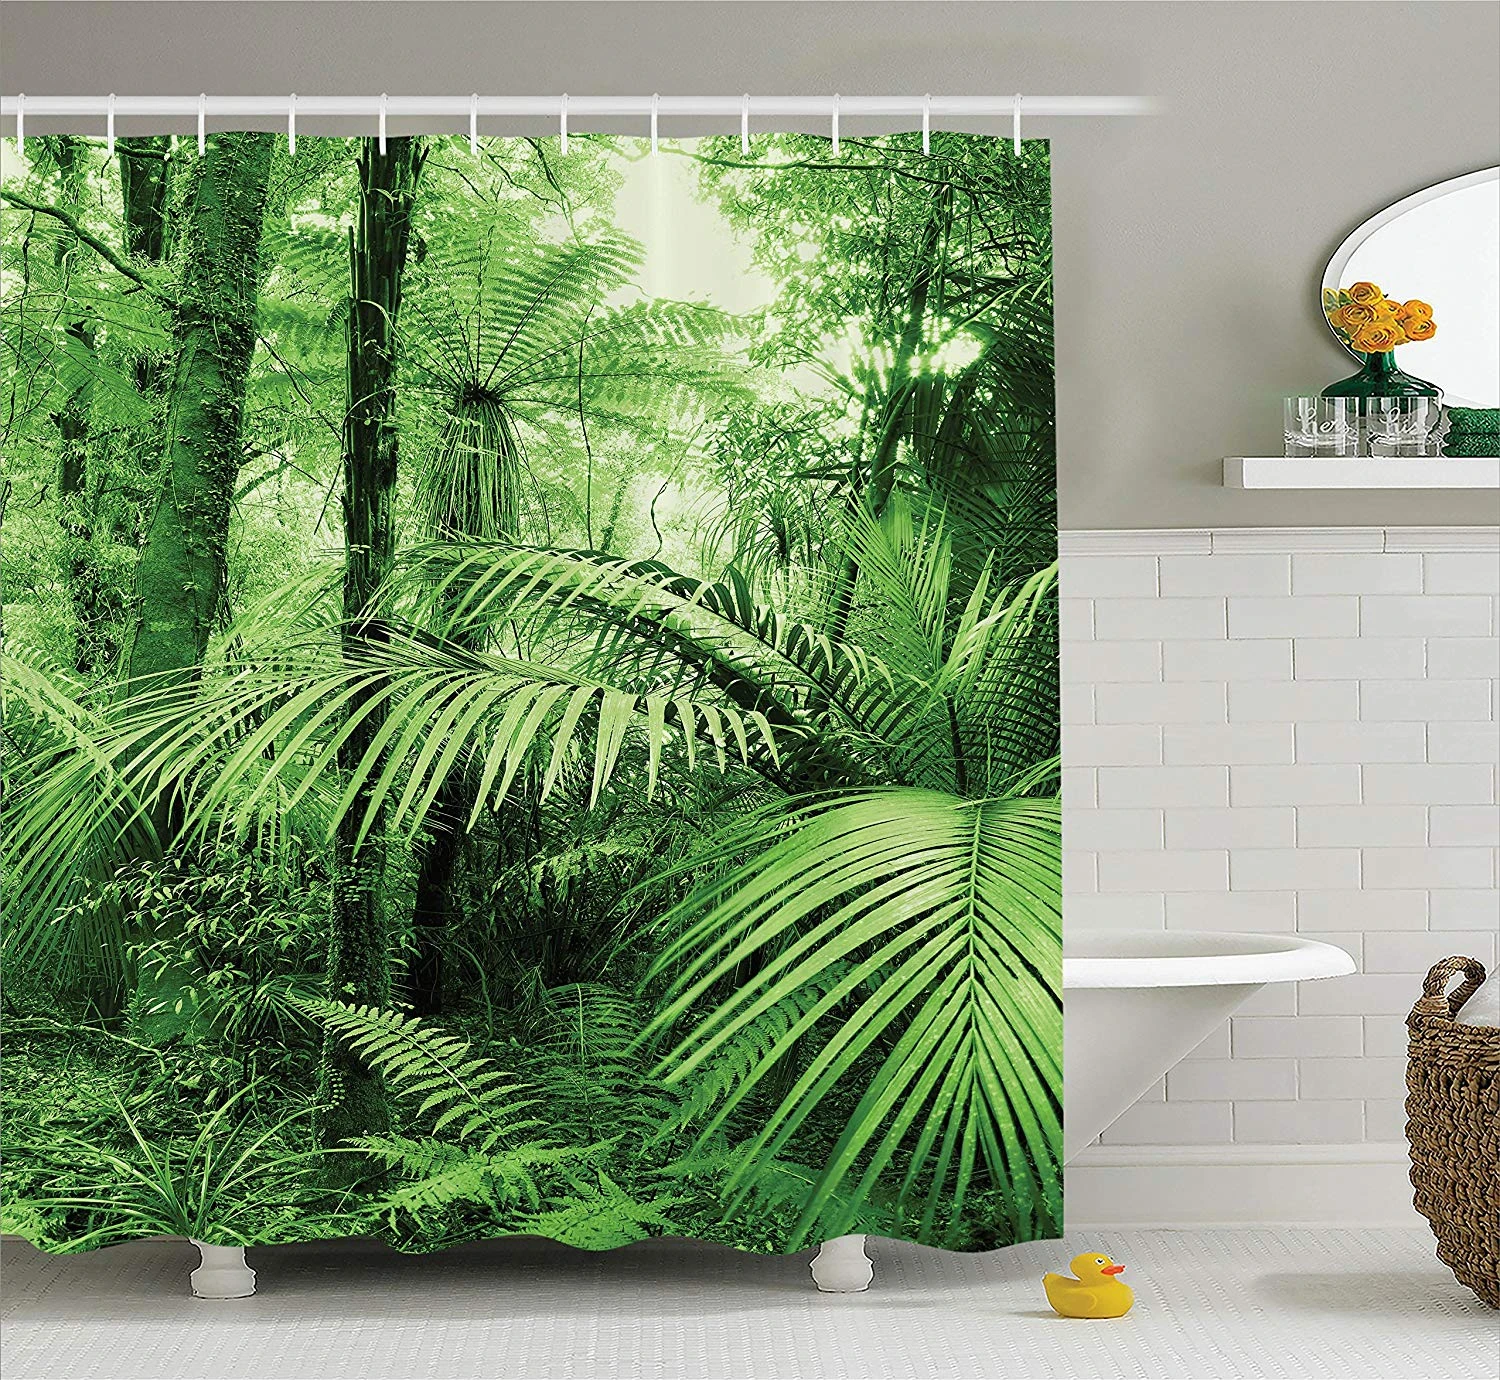 Green Palm Jungle Bathroom Decor Waterproof Fabric Shower Curtain Mat W/12 Hooks